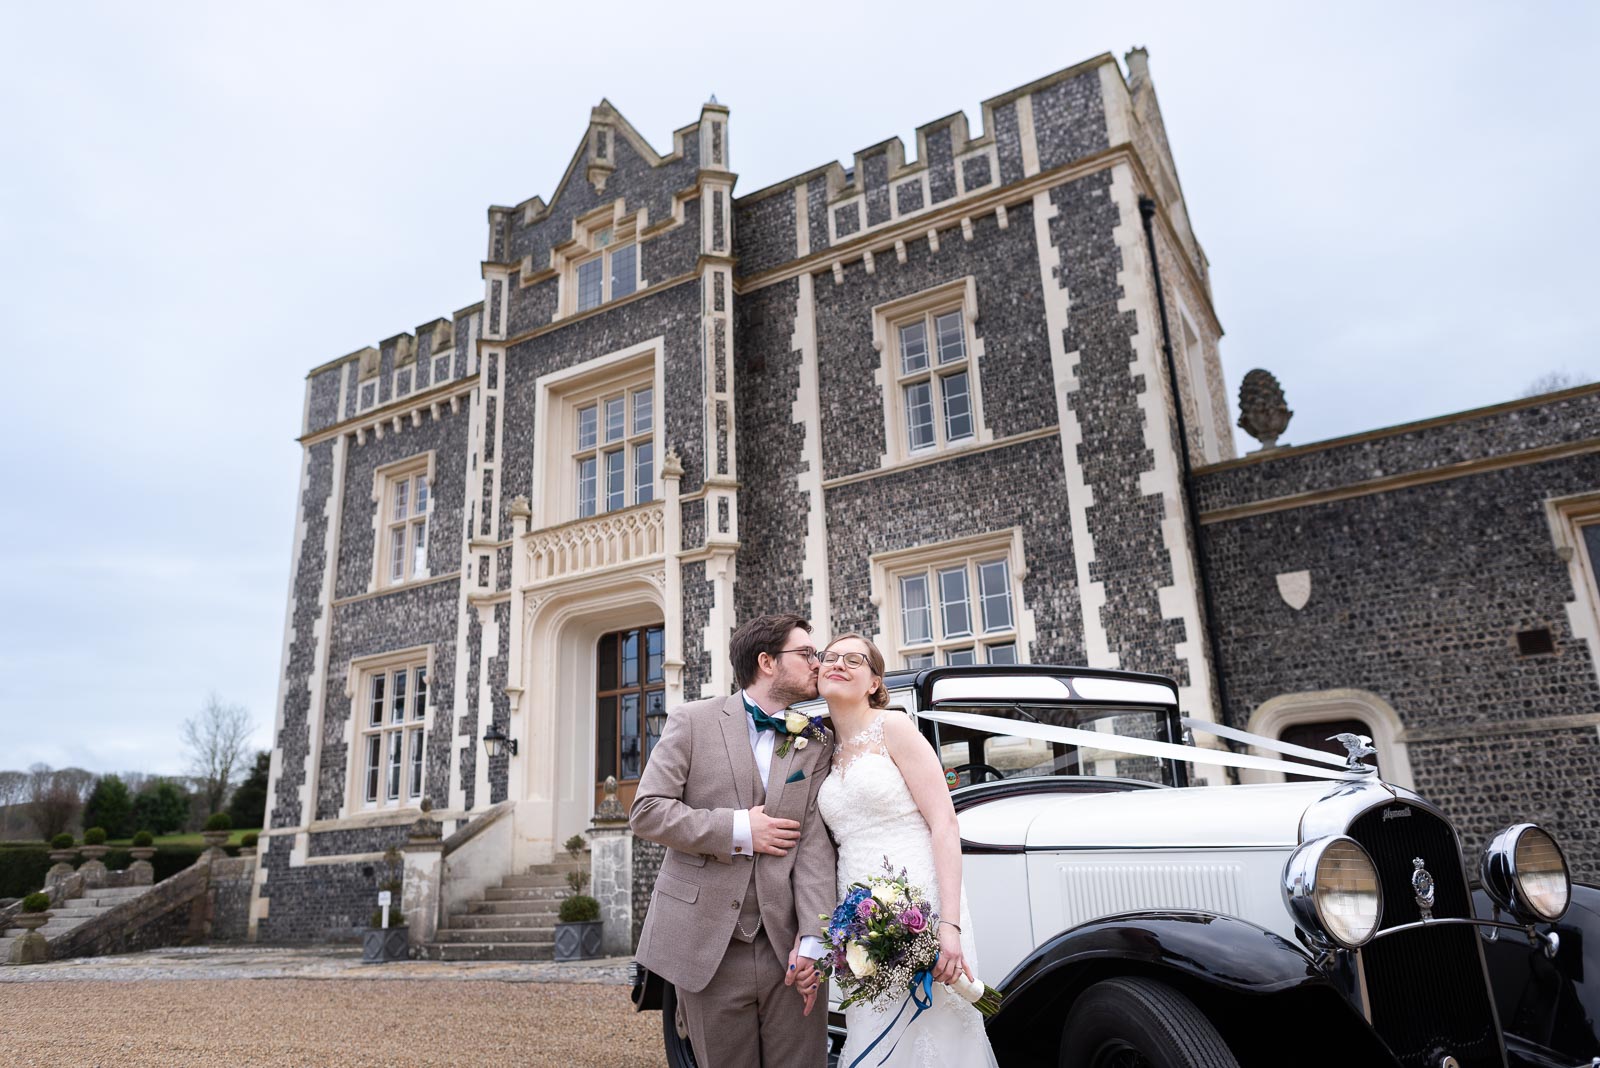 Lewis kisses Stephanie on the cheek next to their wedding car outside Folkington Manor near Polegate.